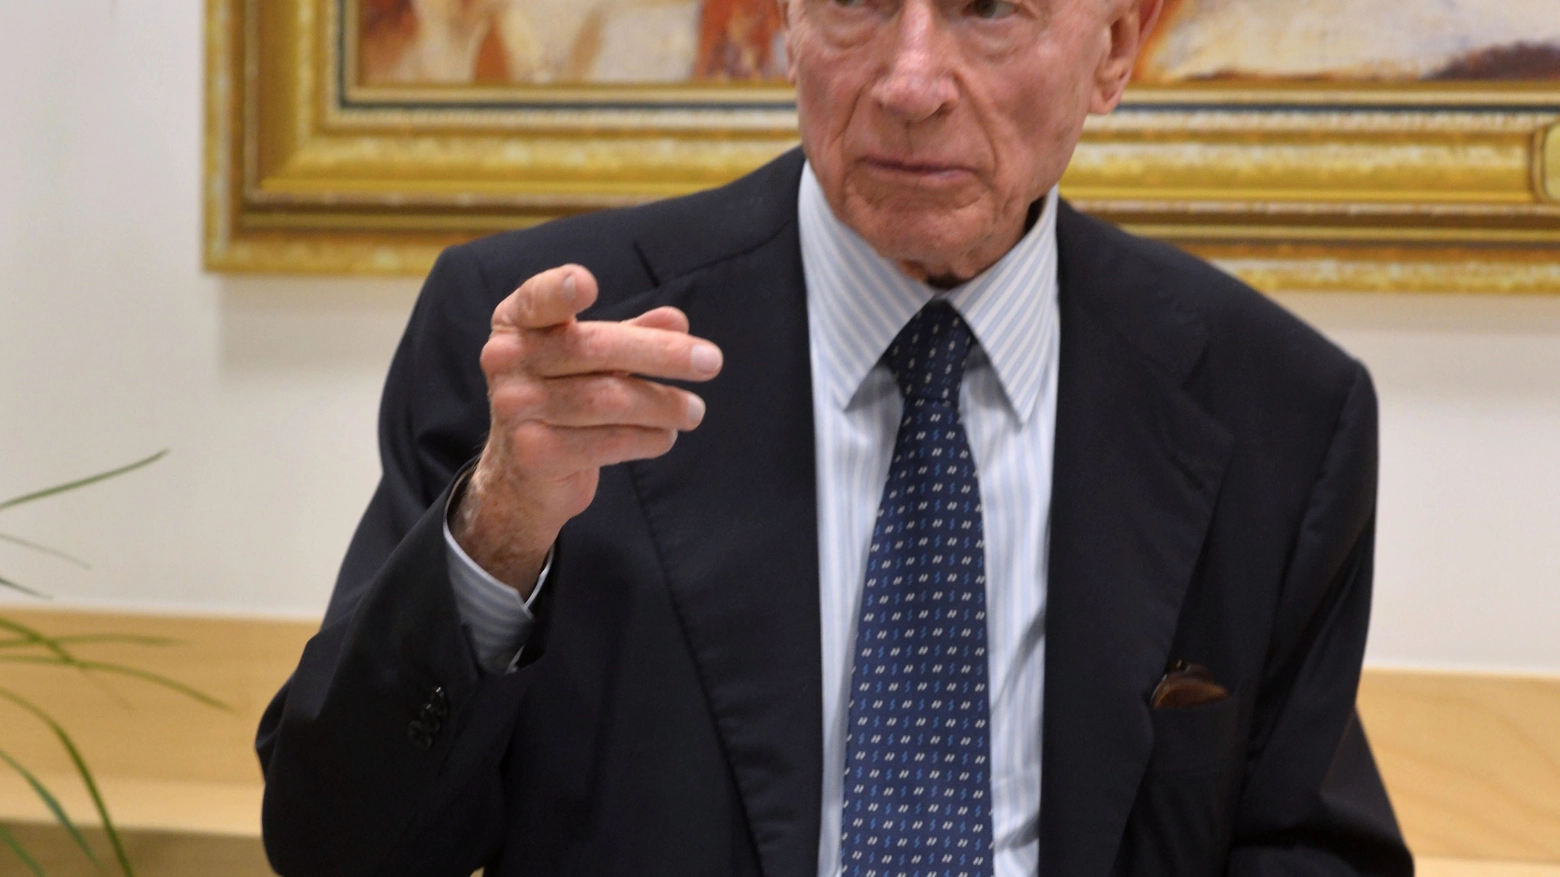 Bernardo Caprotti, fondatore di Esselunga (Imagoeconomica)